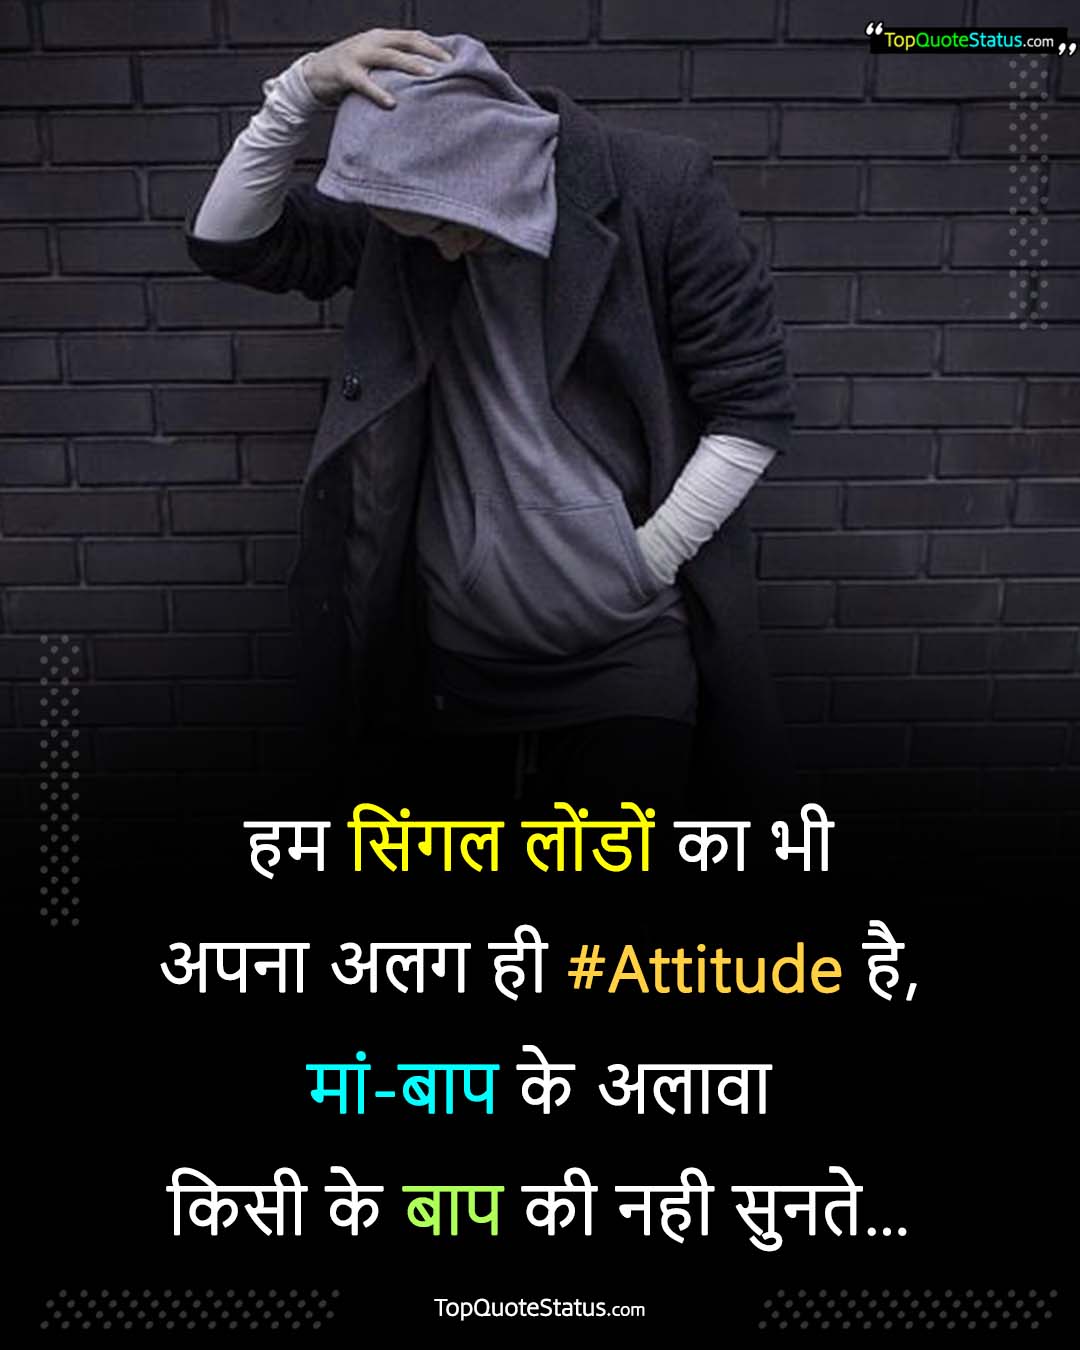 High Attitude Status in Hindi for Boys